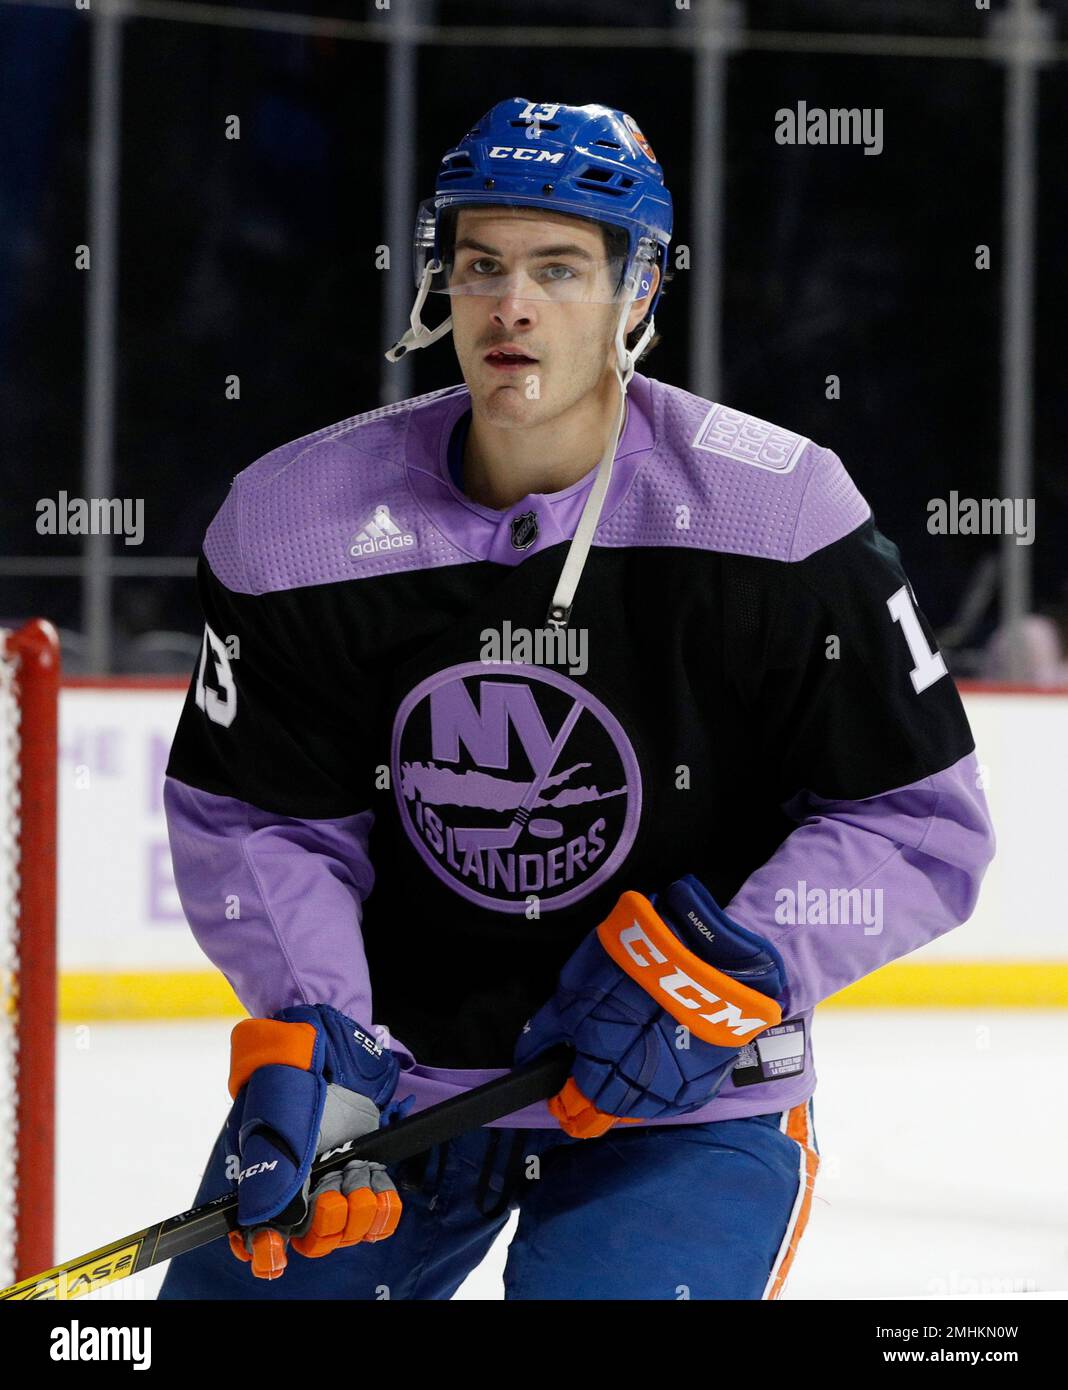 NHL New York Rangers hockey fights cancer Adidas Jersey | SidelineSwap